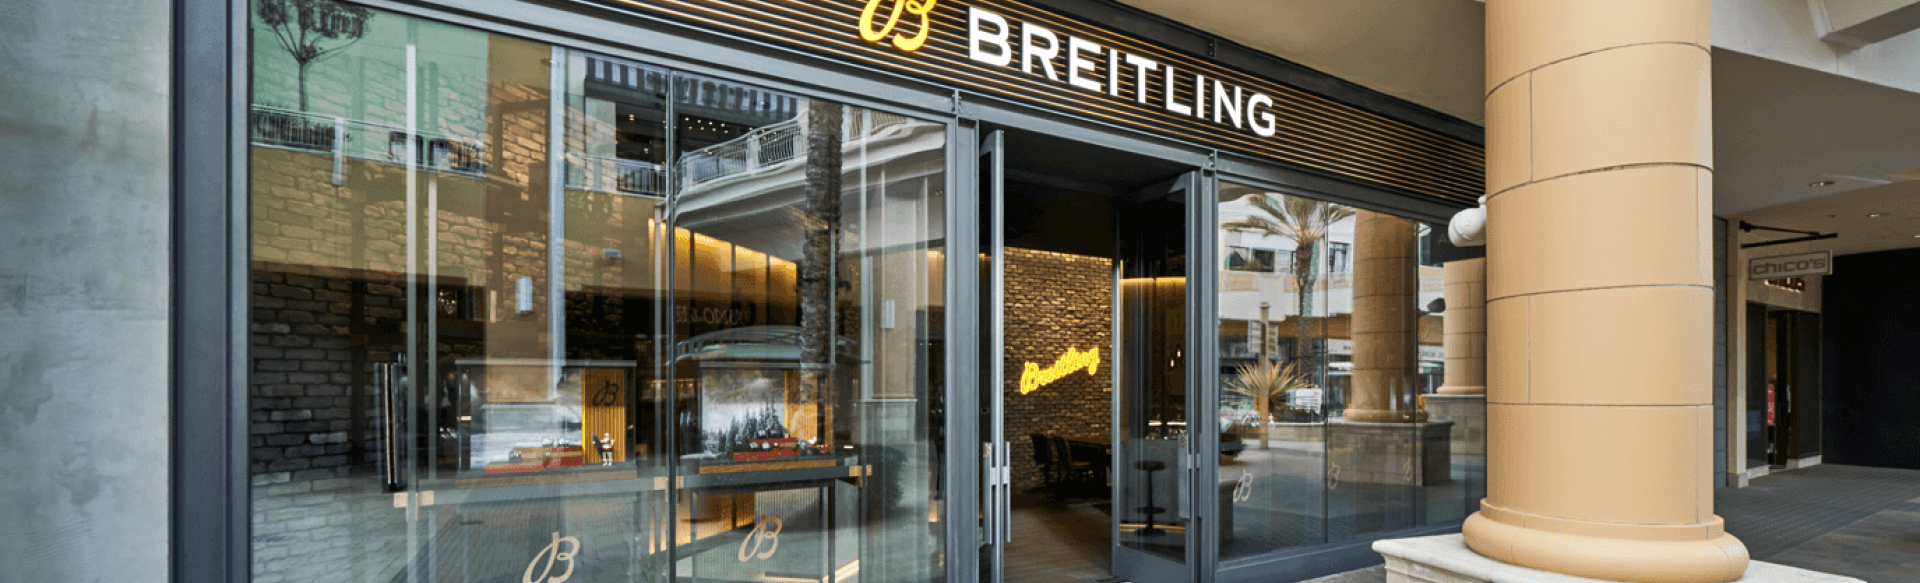 Breitling Boutique San Diego